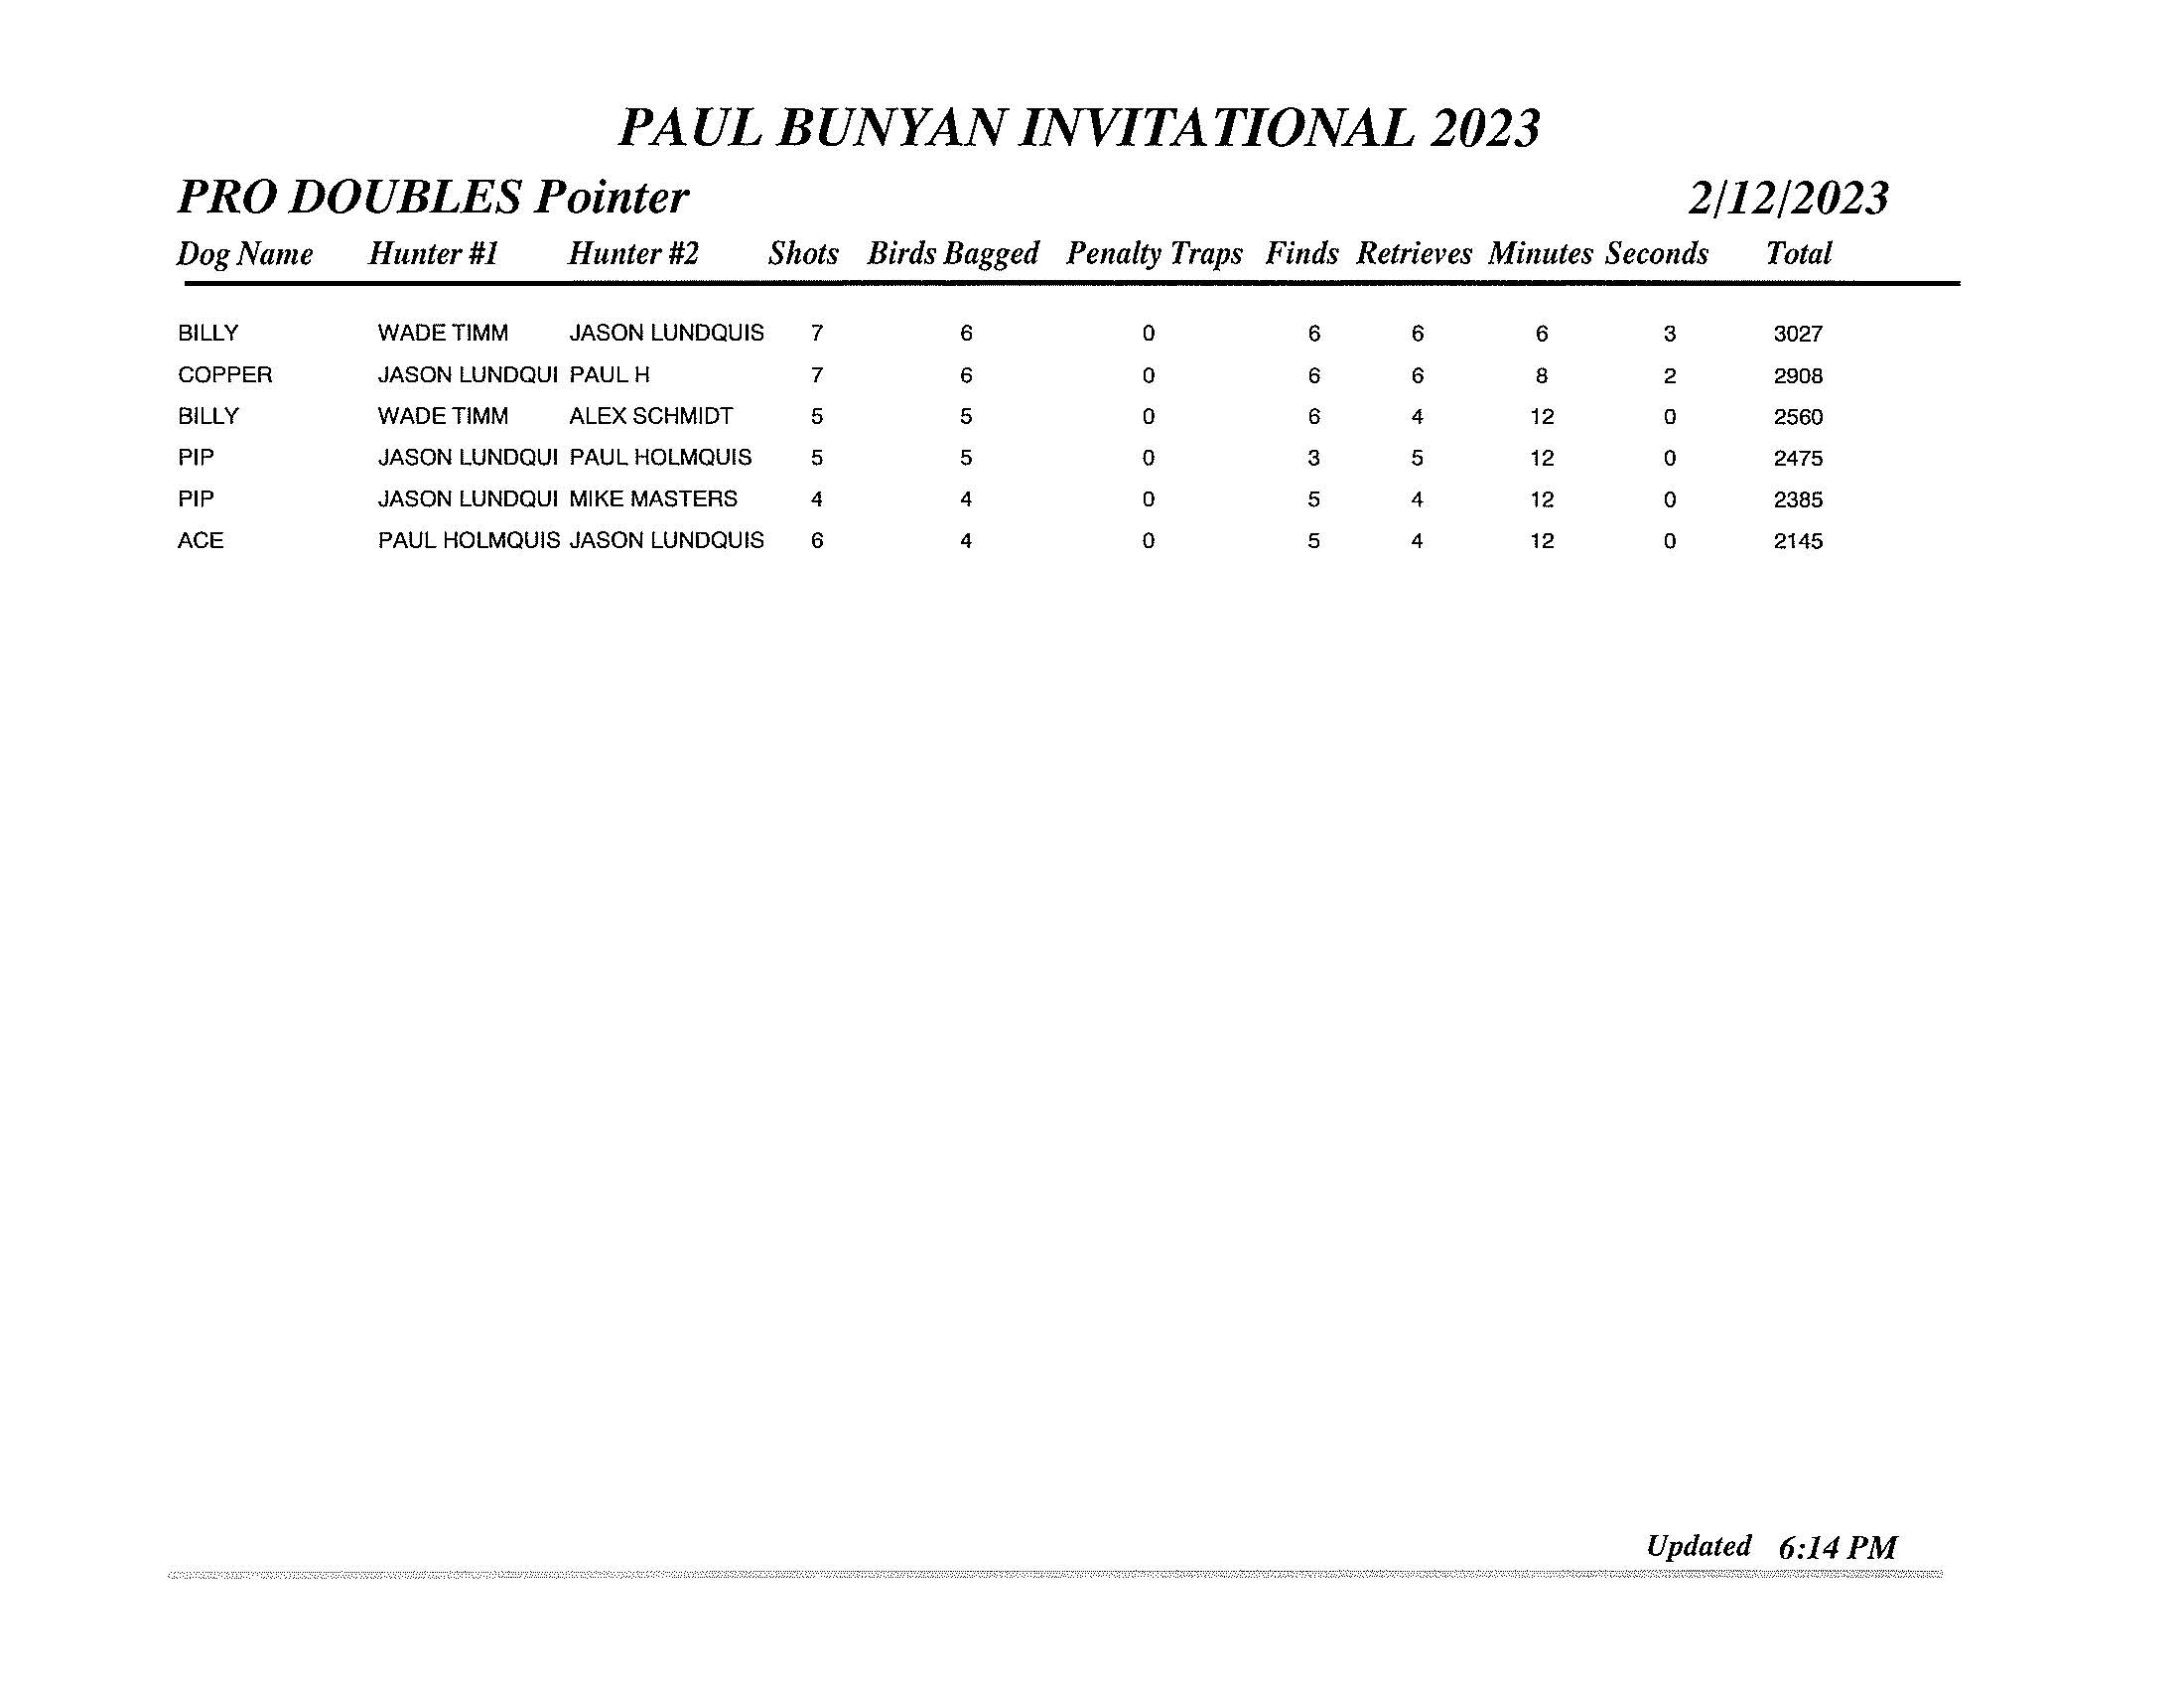 GDC Paul Bunyan Final 2023 (13)